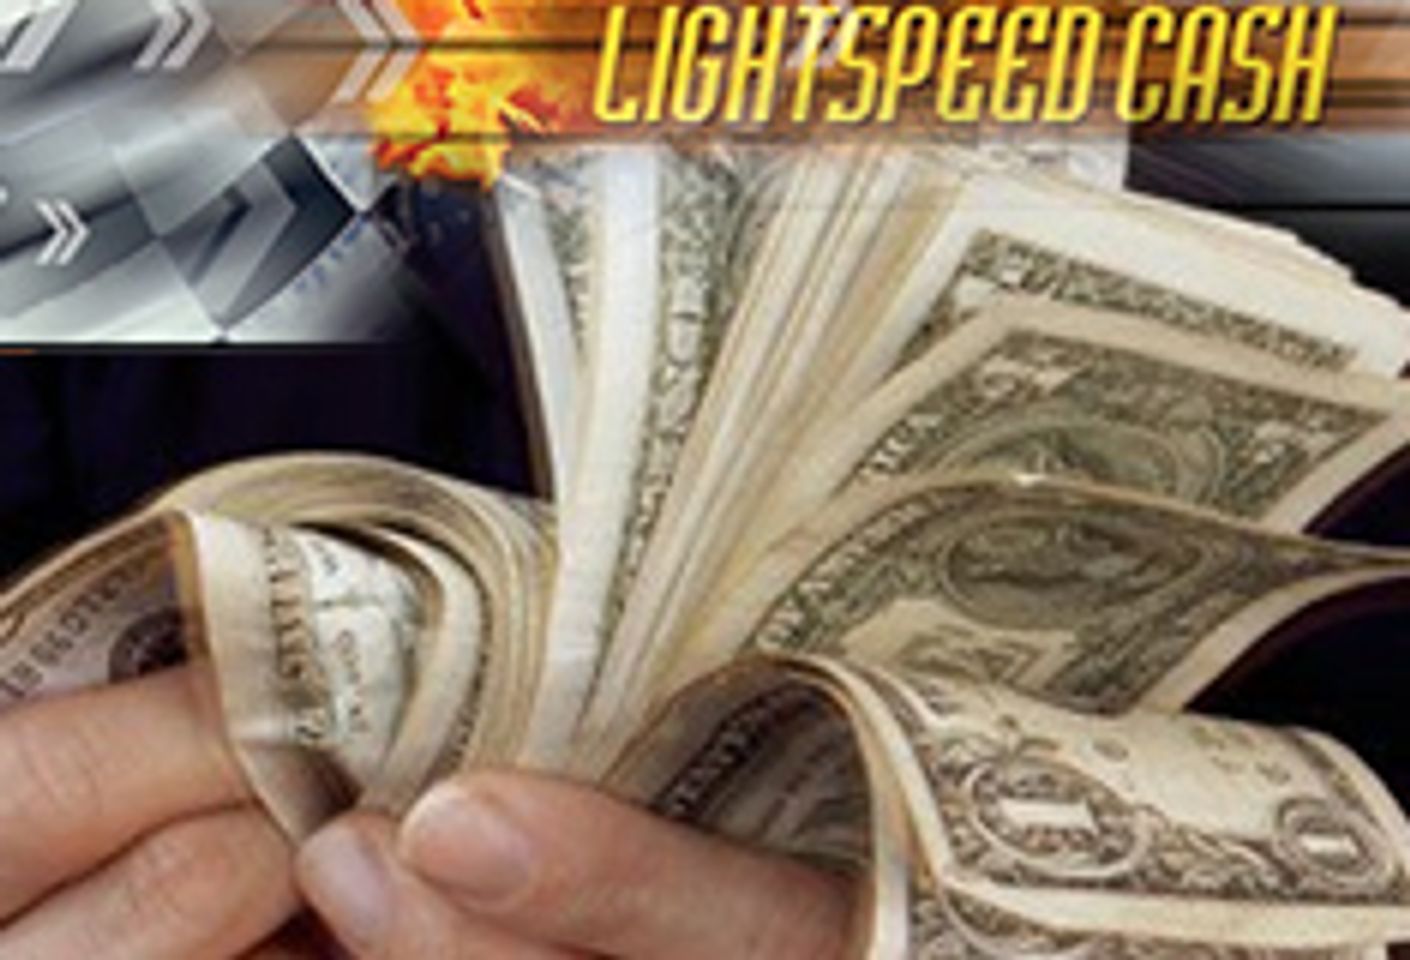 Lightspeed Cash Offers Bonus Weekend